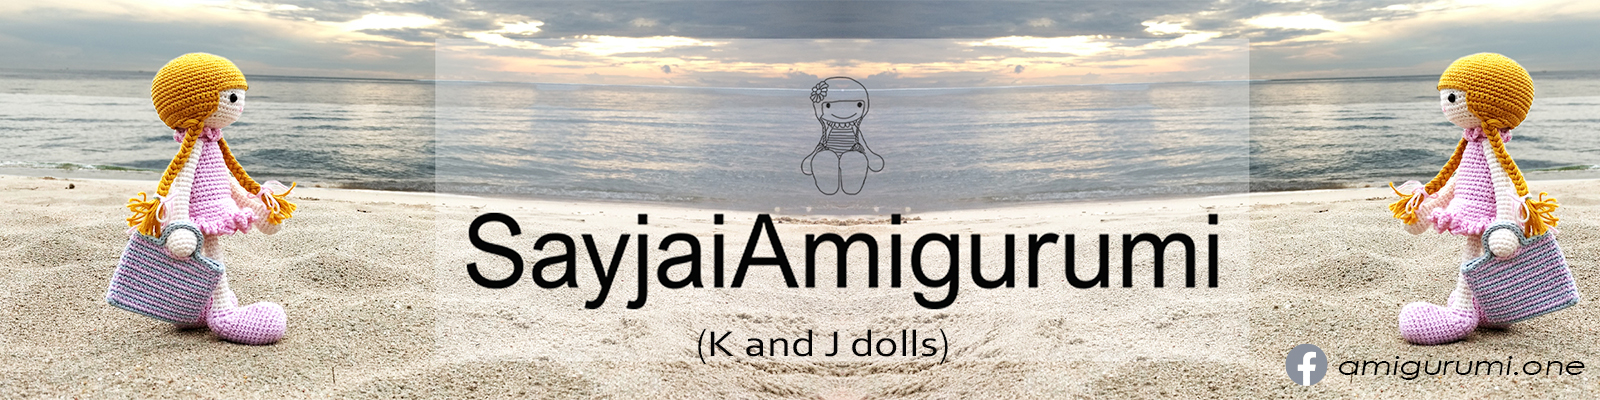 Sayjai Amigurumi Crochet Patterns and Crochet Kits~ K and J Dolls / K and J Publishing